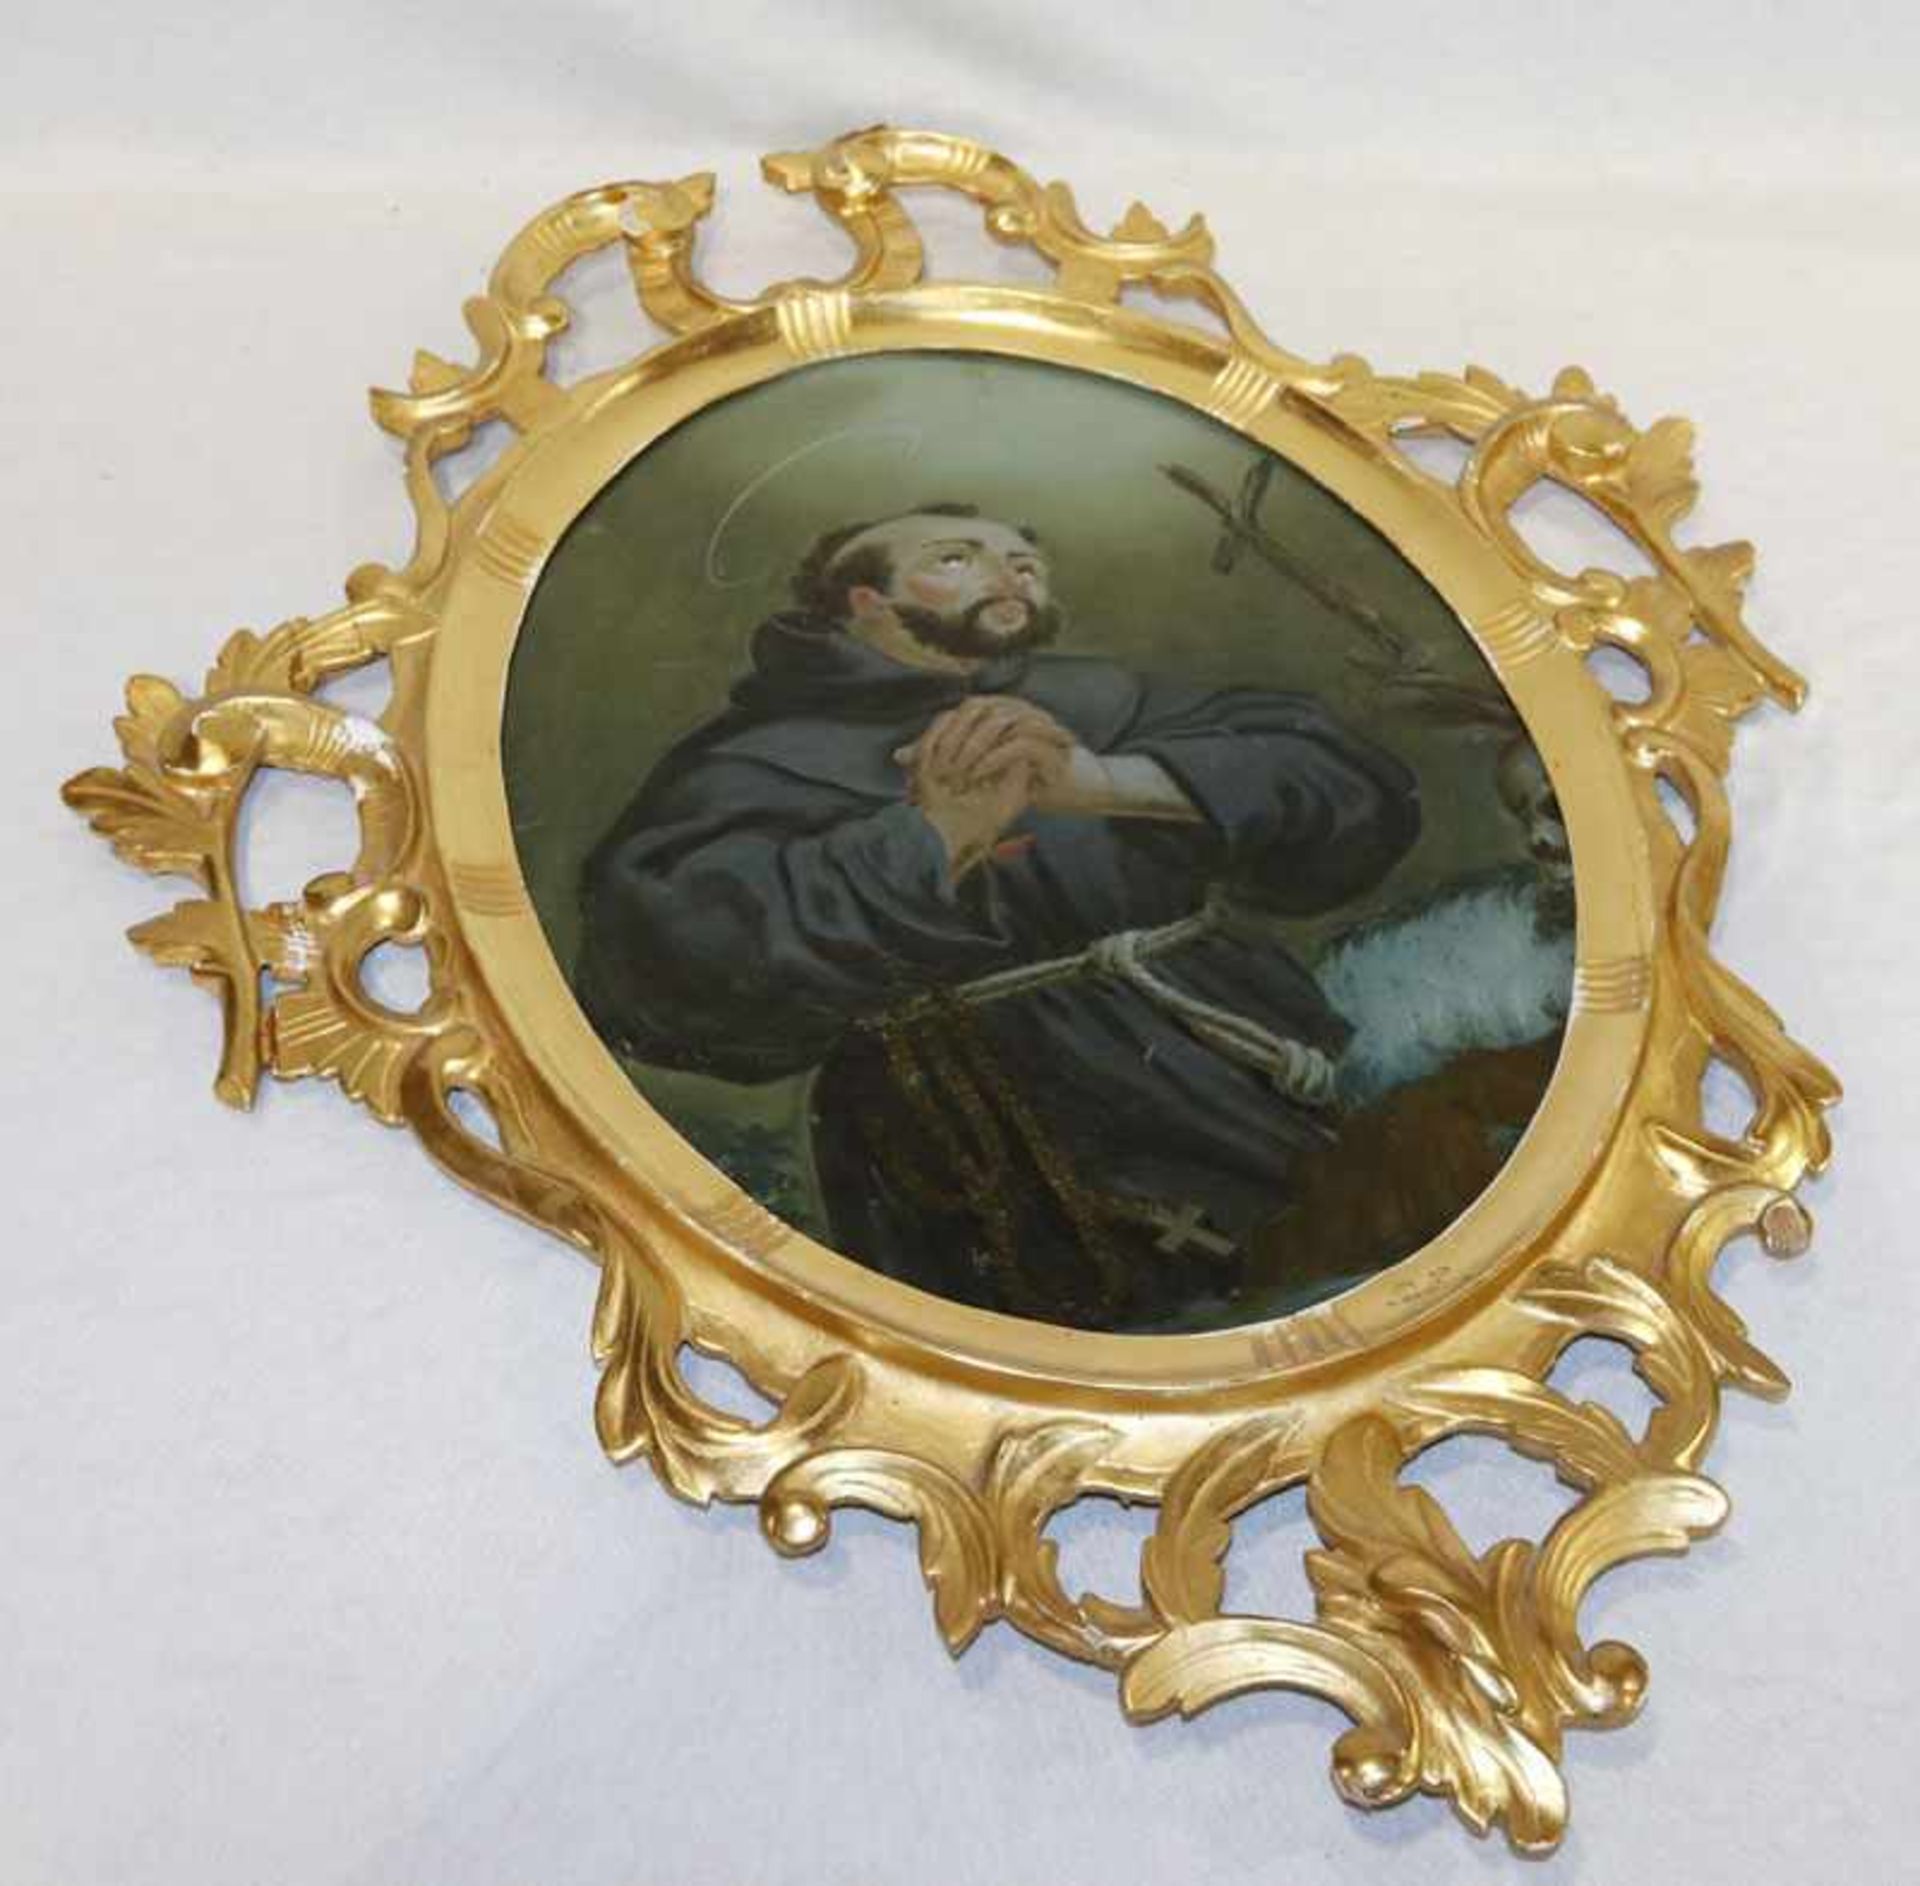 Hinterglasbild 'Hl. Antonius', wohl Augsburg, 19. Jahrhundert, in dekorativ geschnitztem Rahmen,